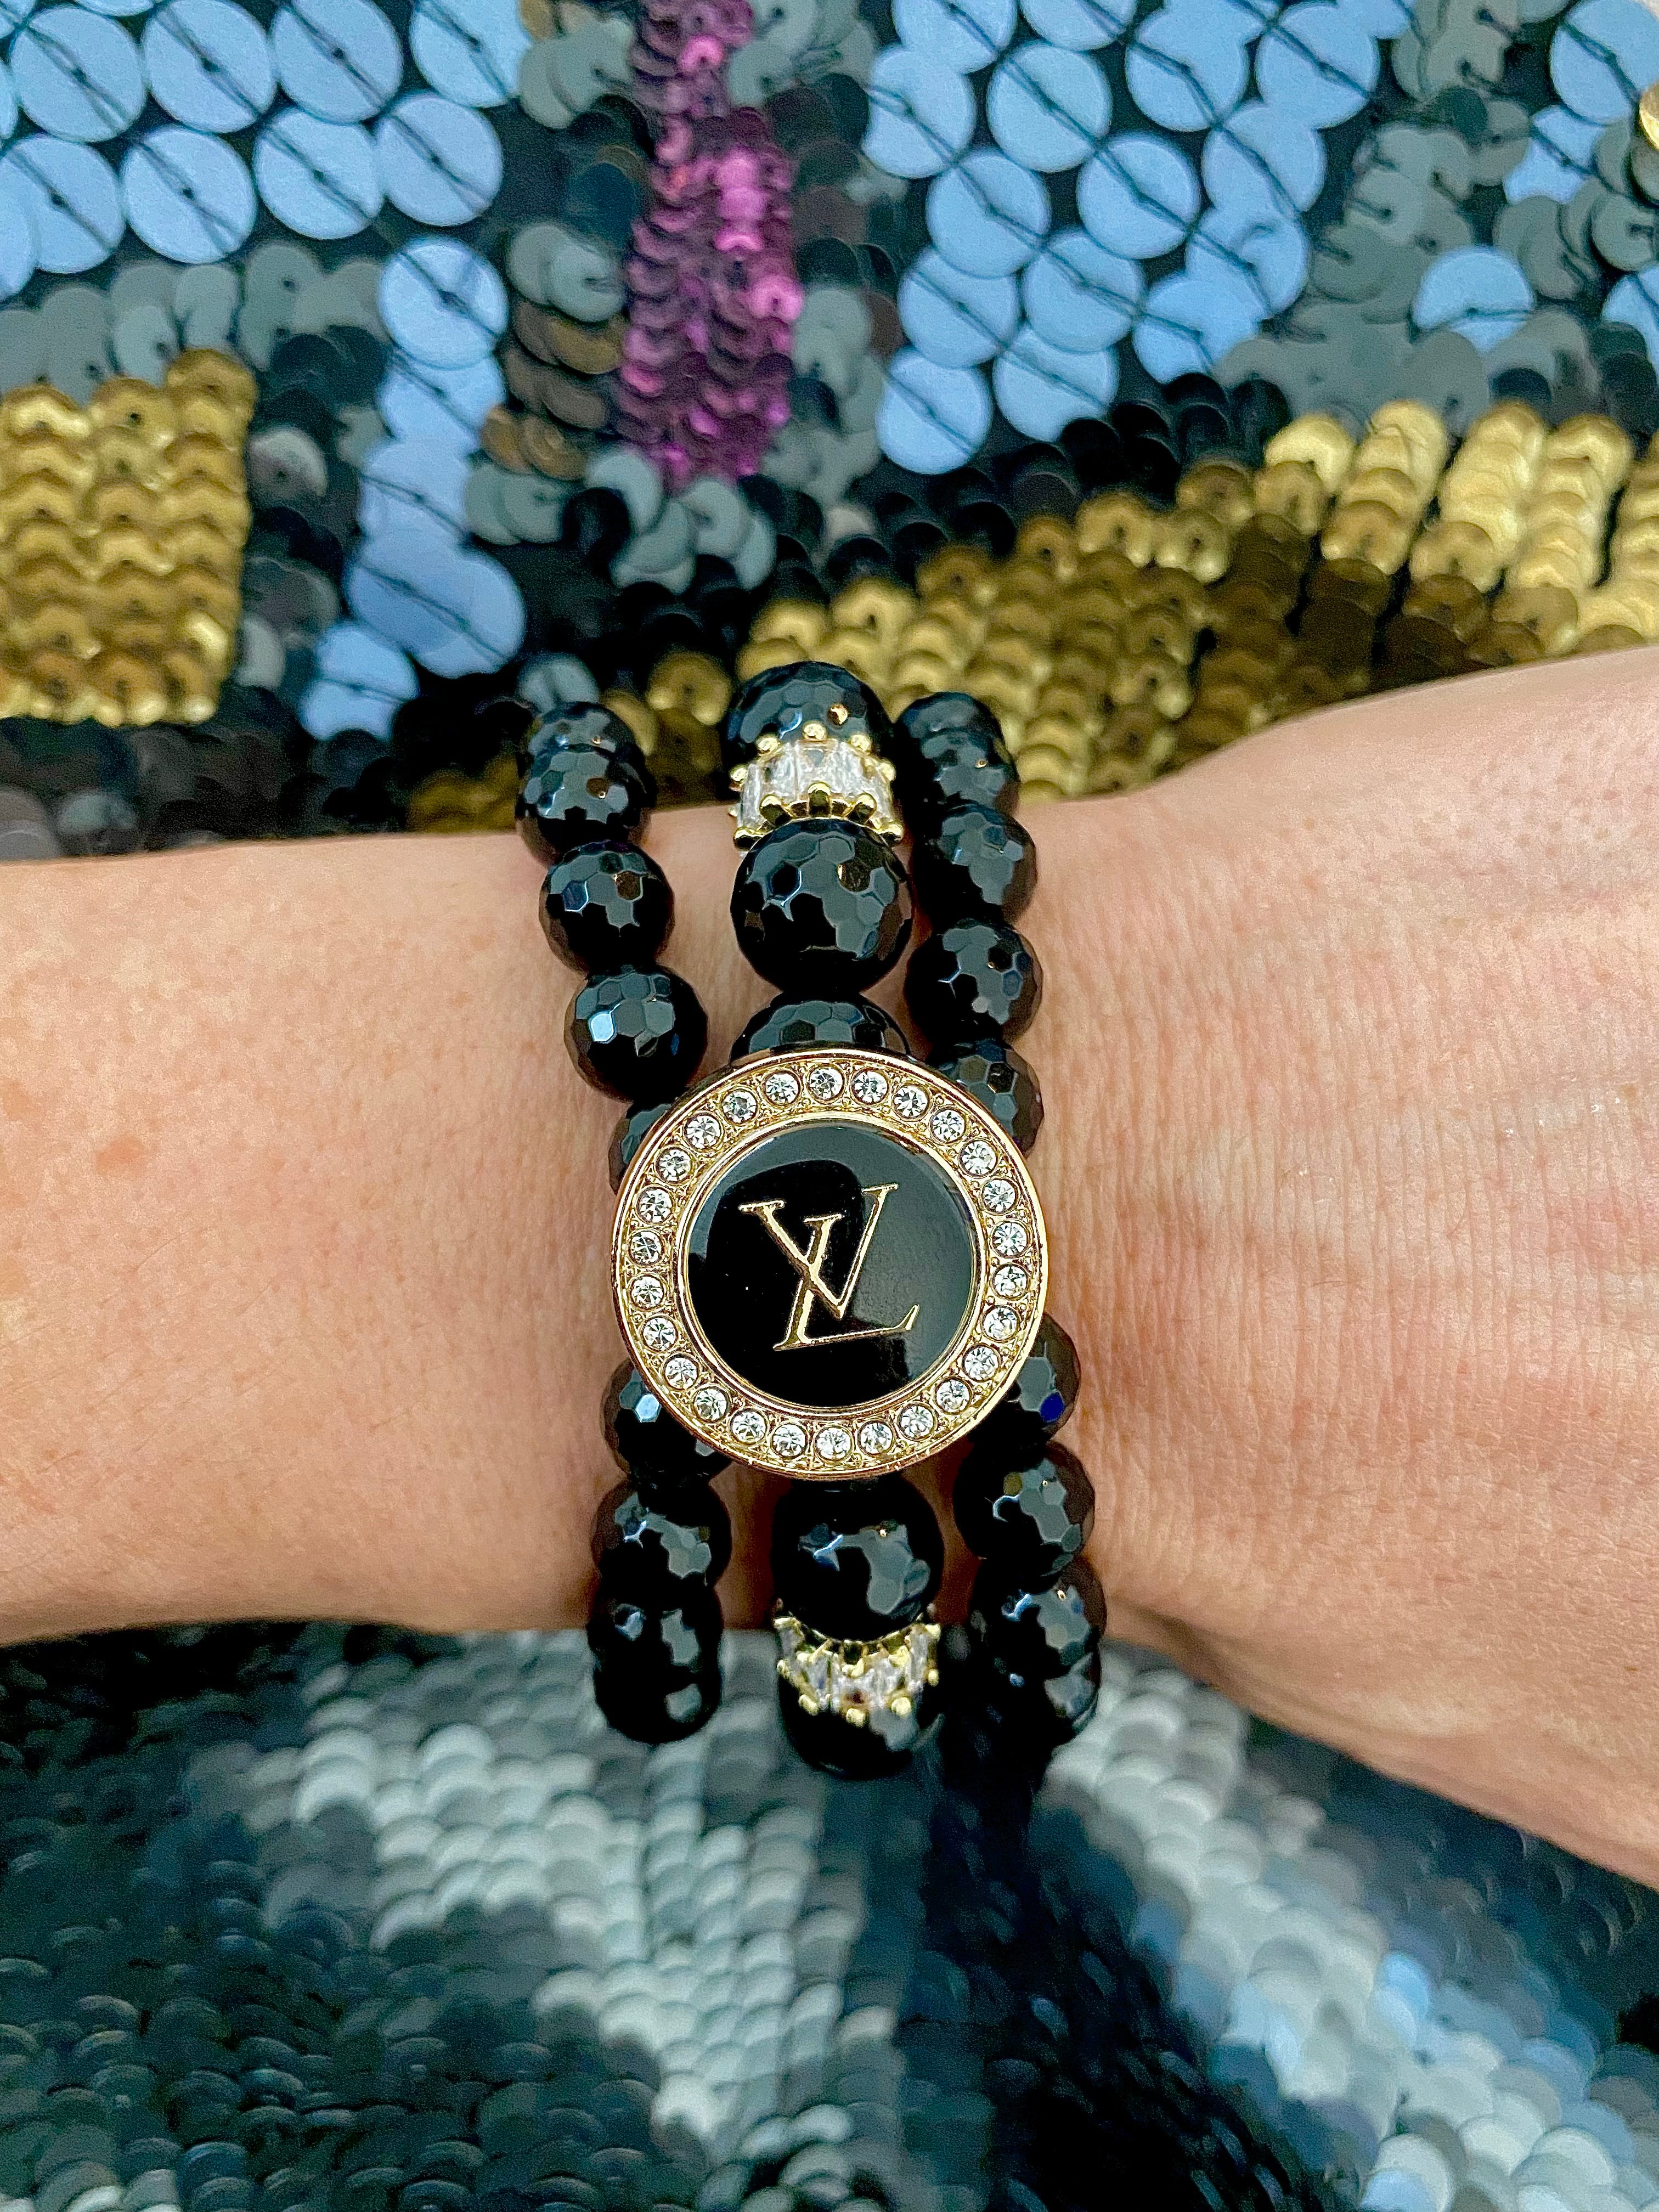 RARE! Louis Vuitton V Motif Gold Pearl Bracelet  Pearl bracelet, Gold  pearl bracelet, Louis vuitton